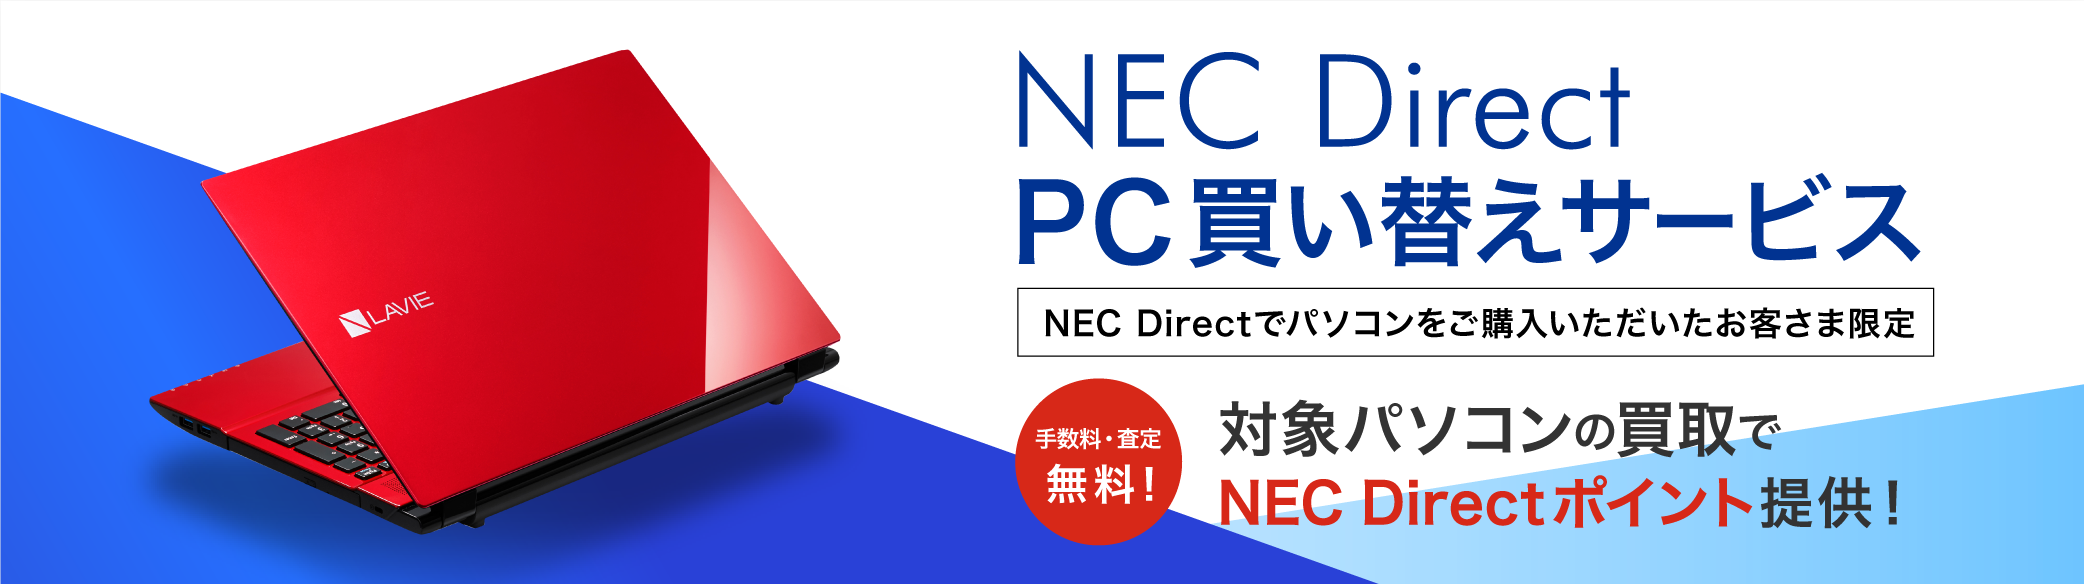 NEC Direct PC買い替えサービス